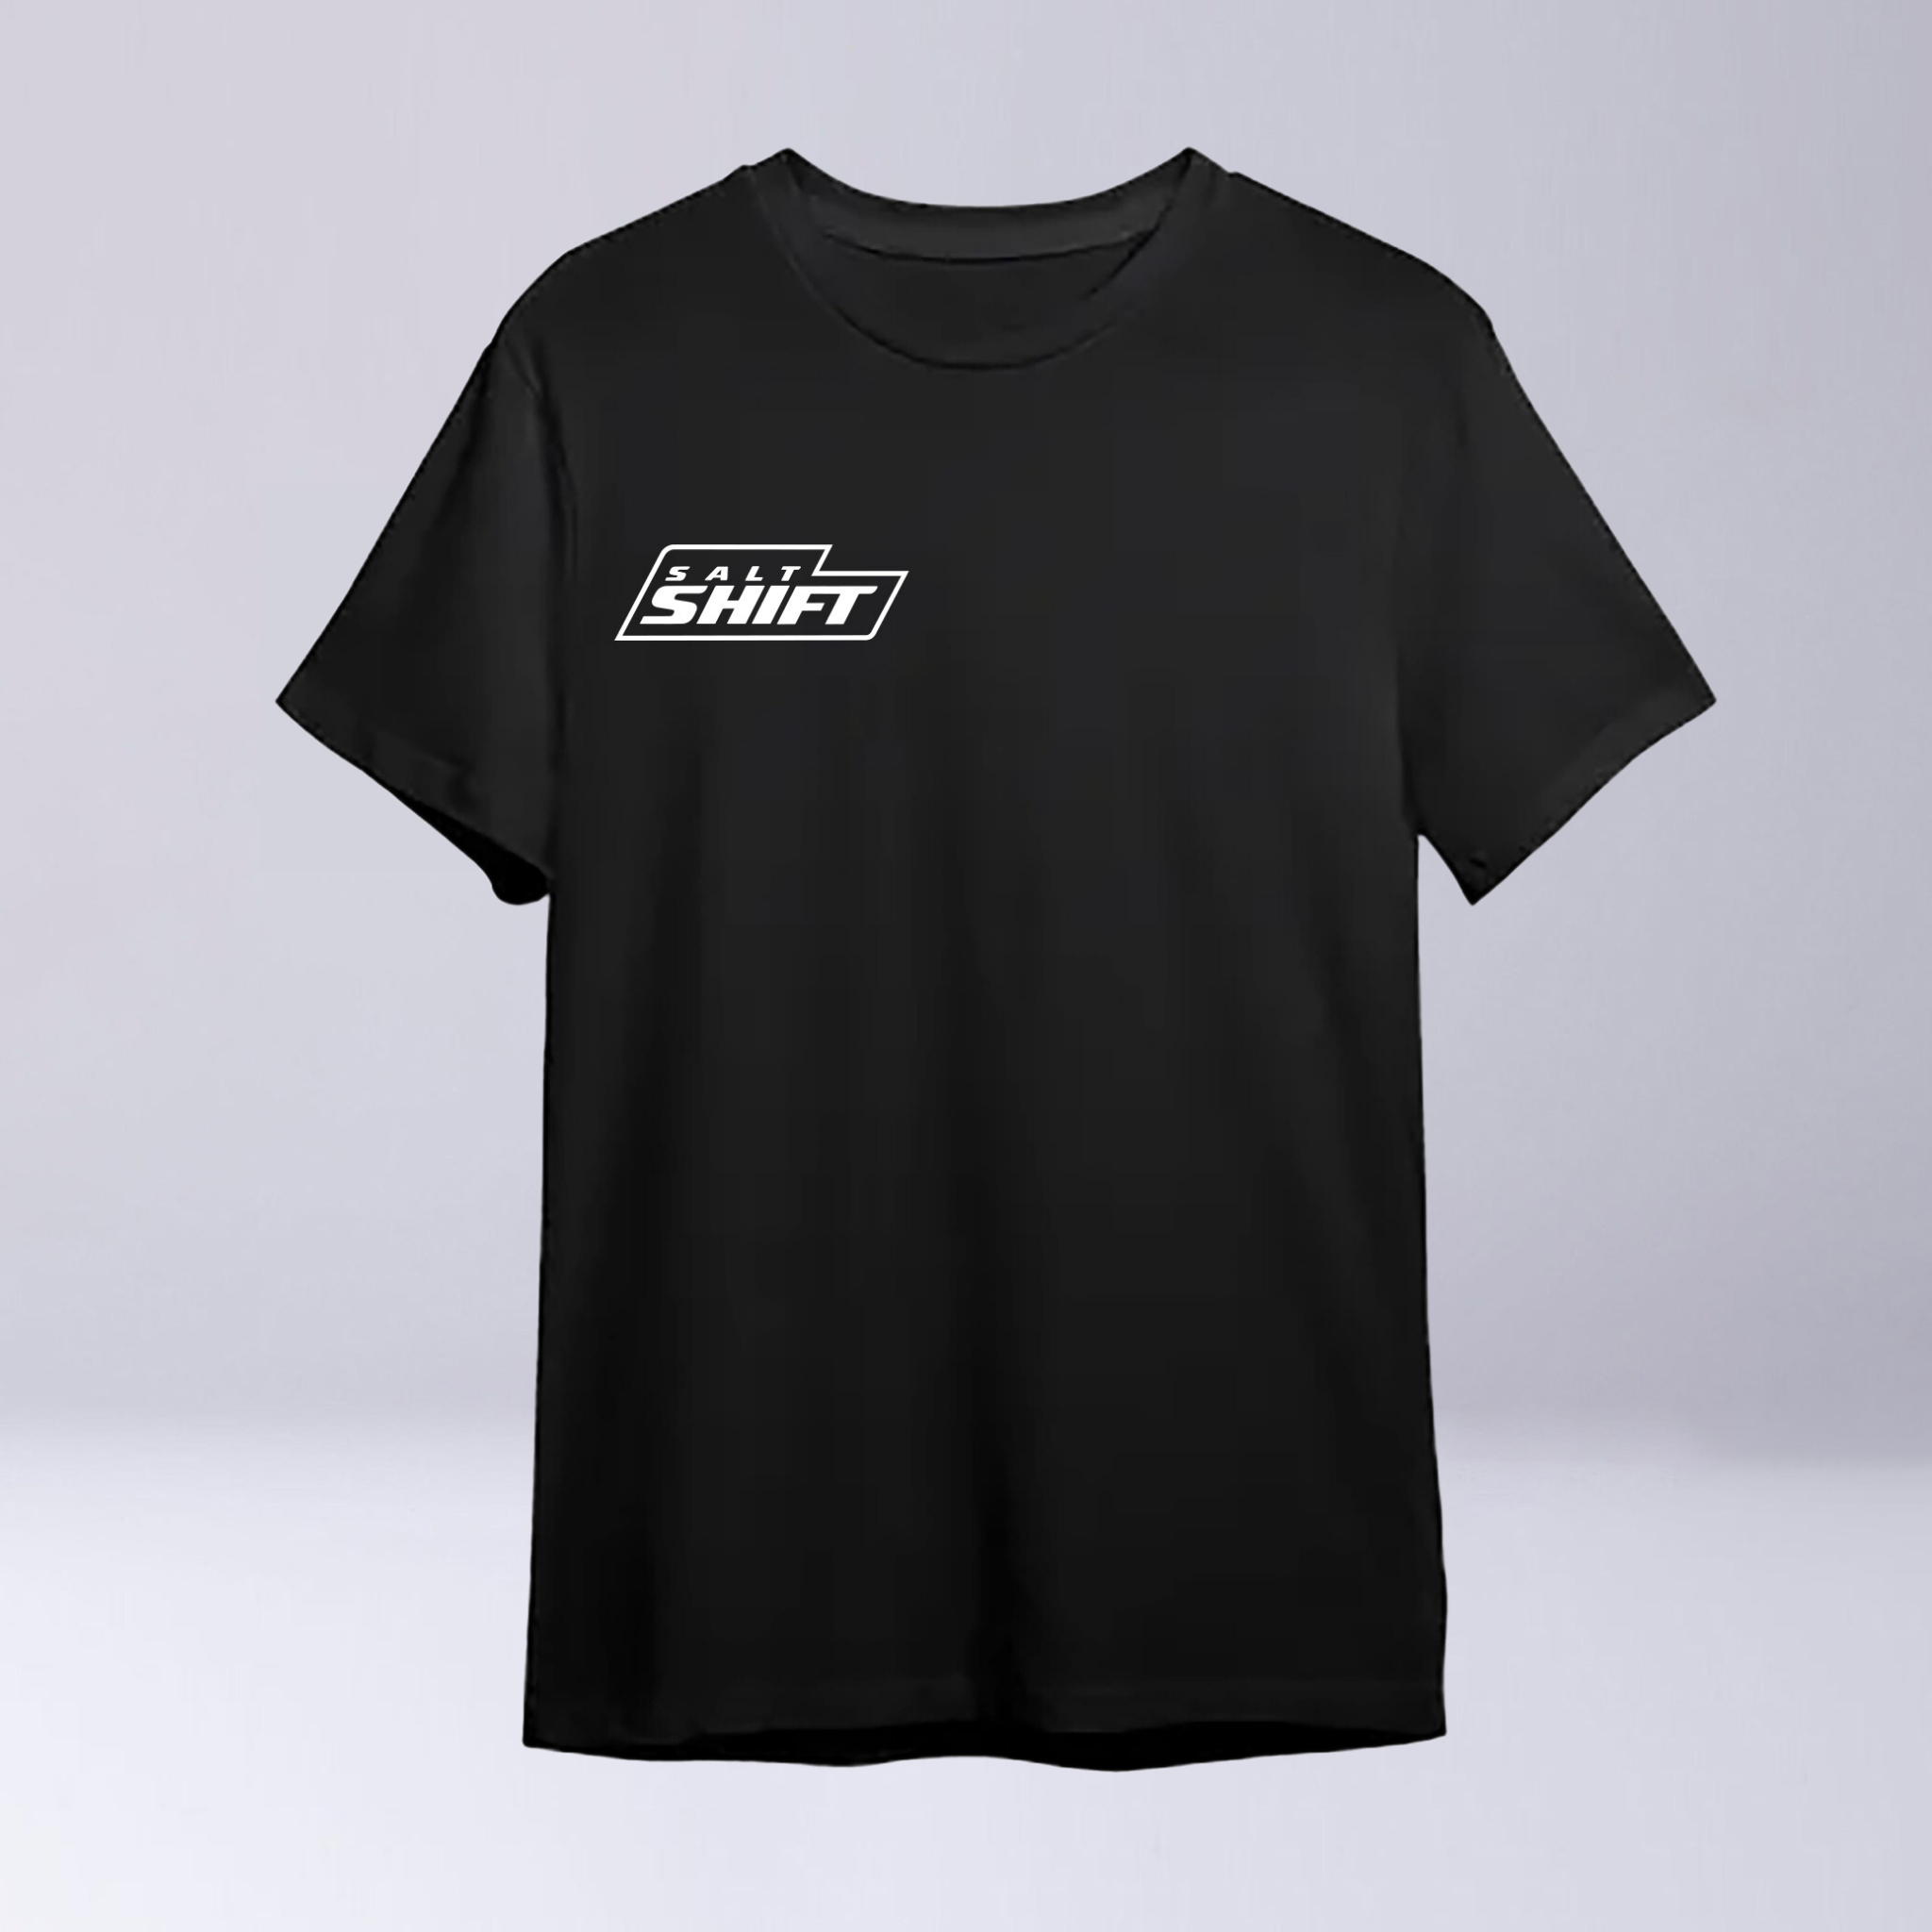 Front_ShirtSaltShift.png